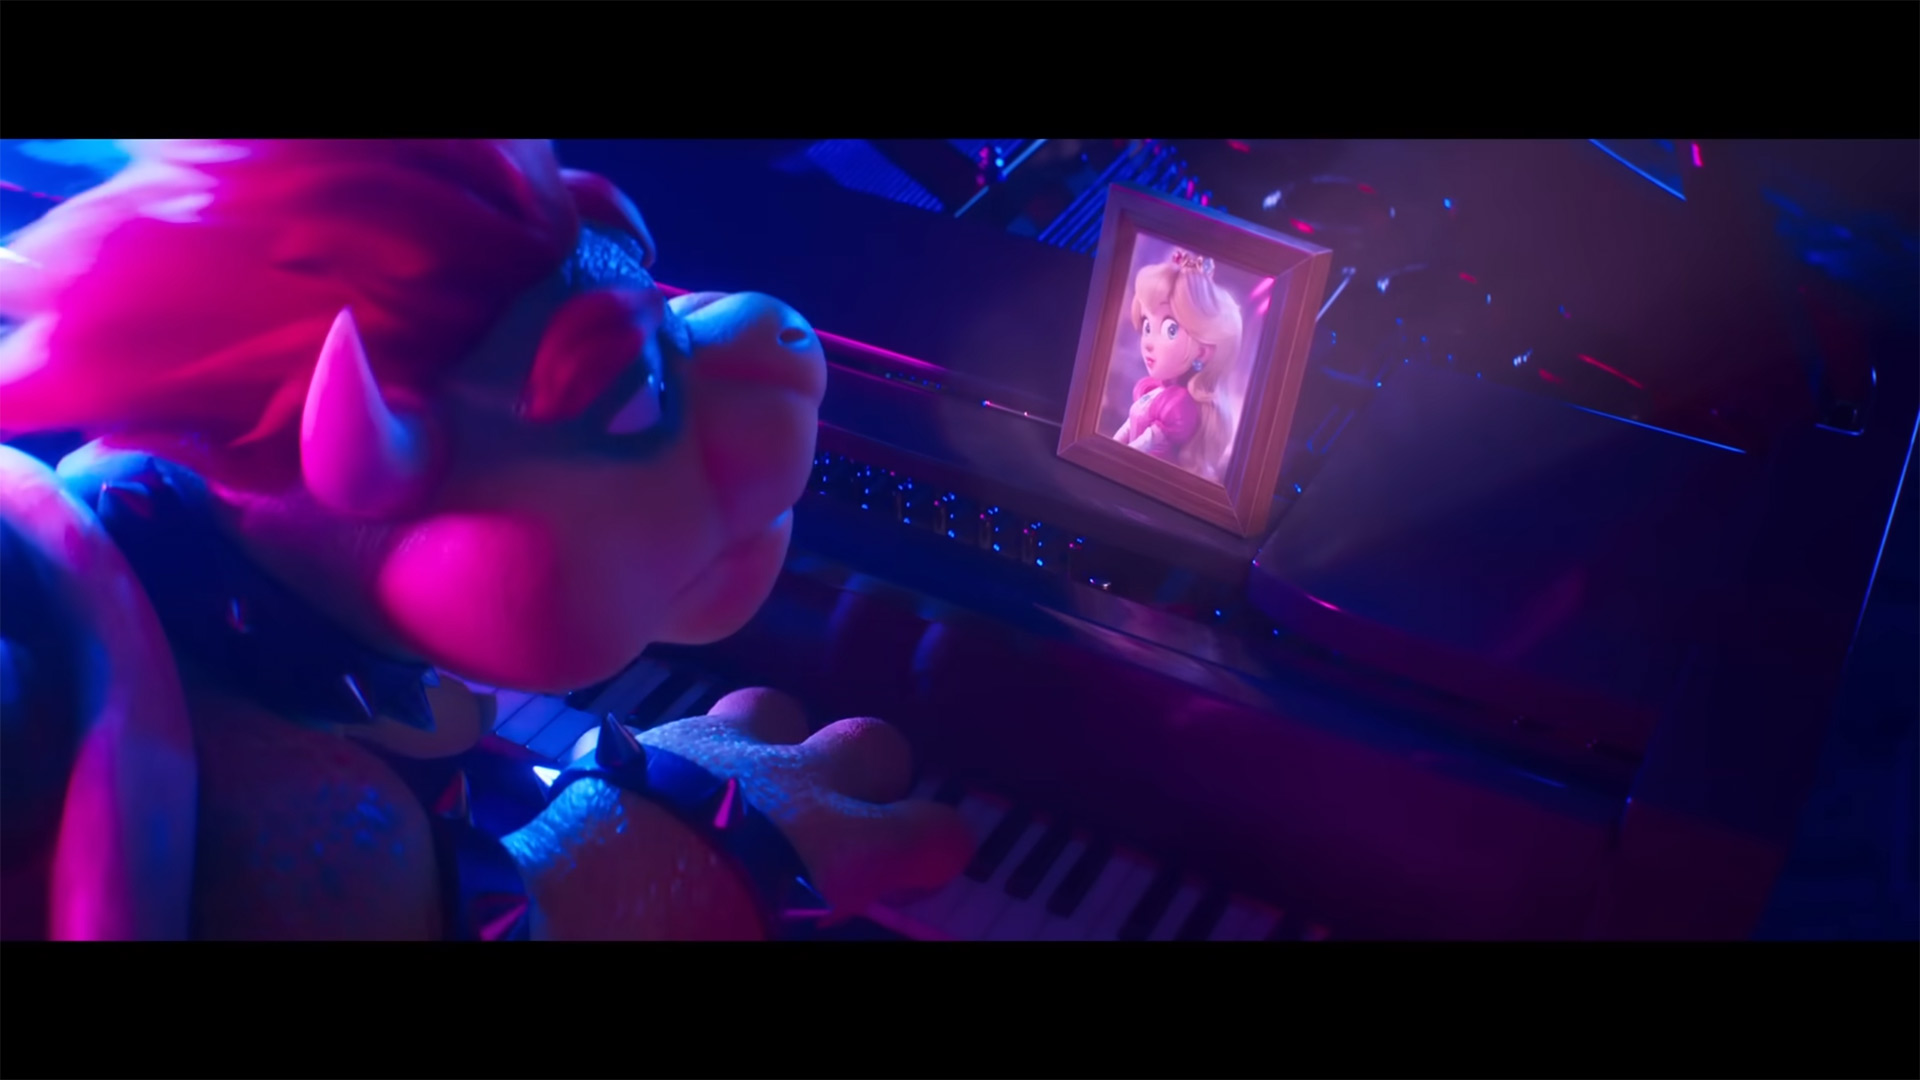 Bowser sings "Peaches" in The Super Mario Bros. movie